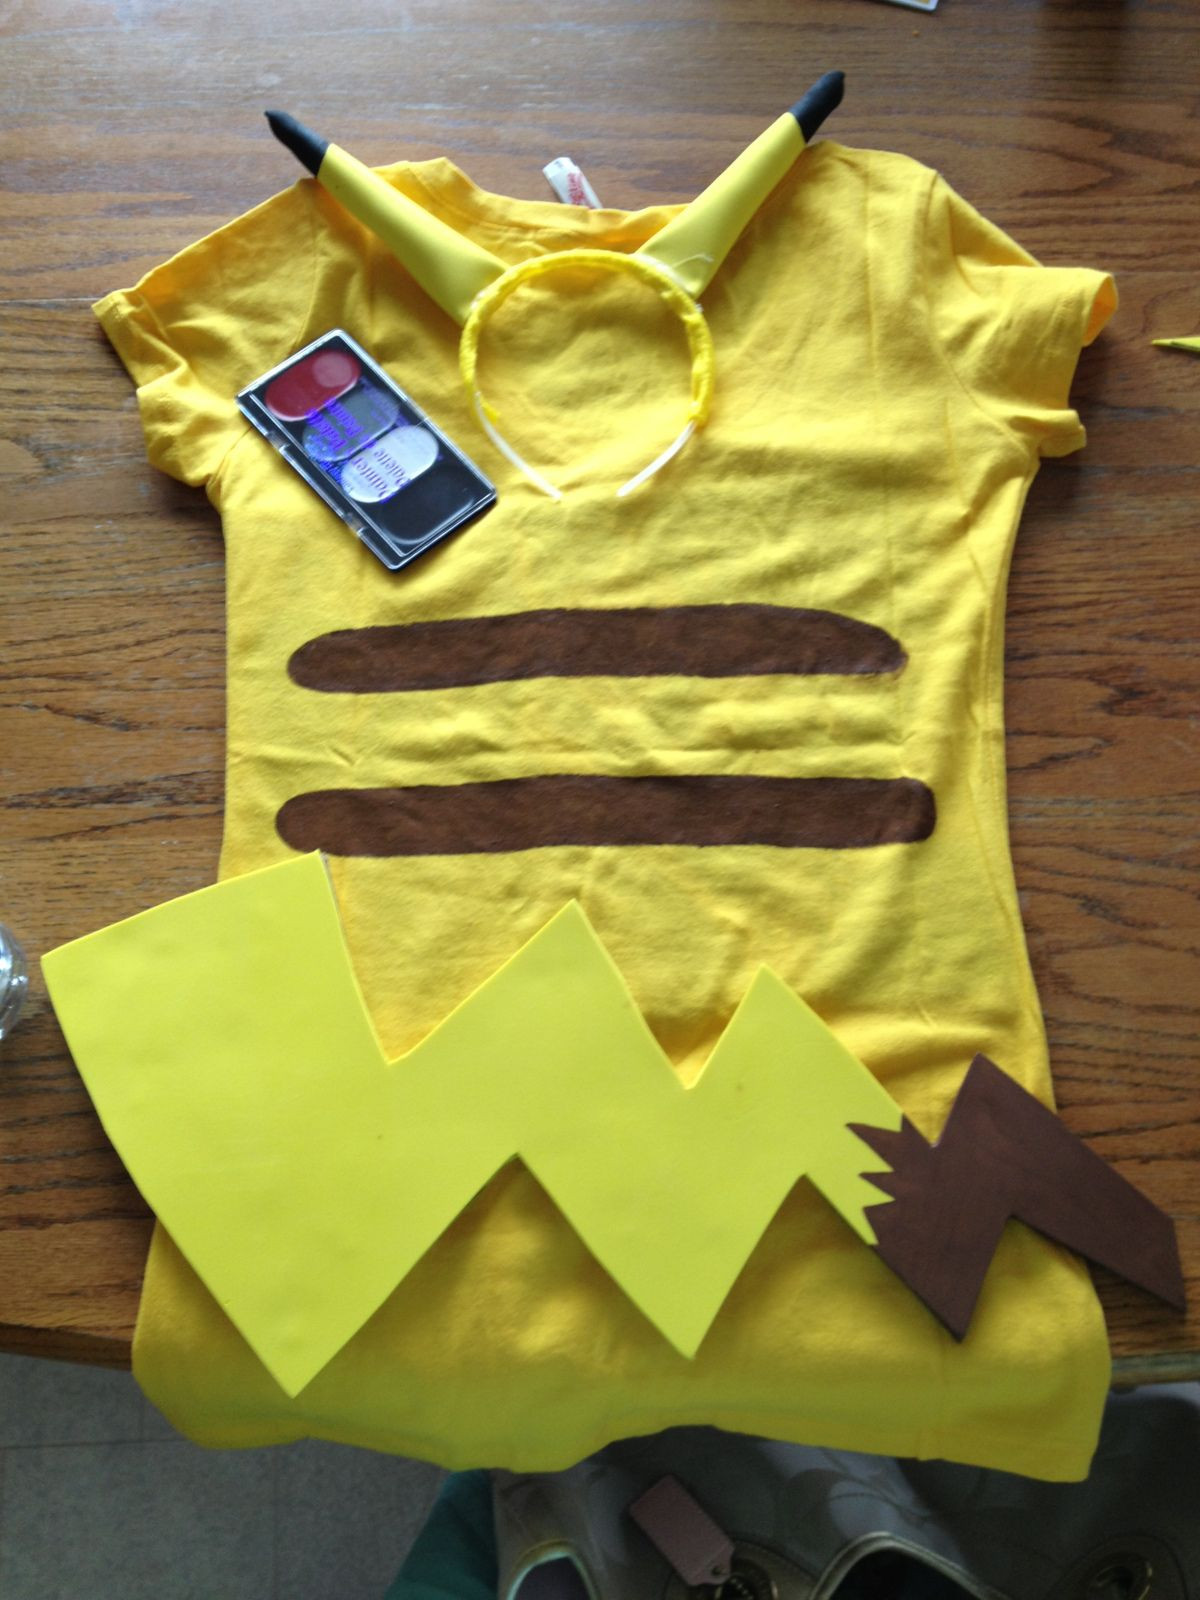 DIY Kids Pikachu Costume
 Pikachu costume for halloween how to in 2019